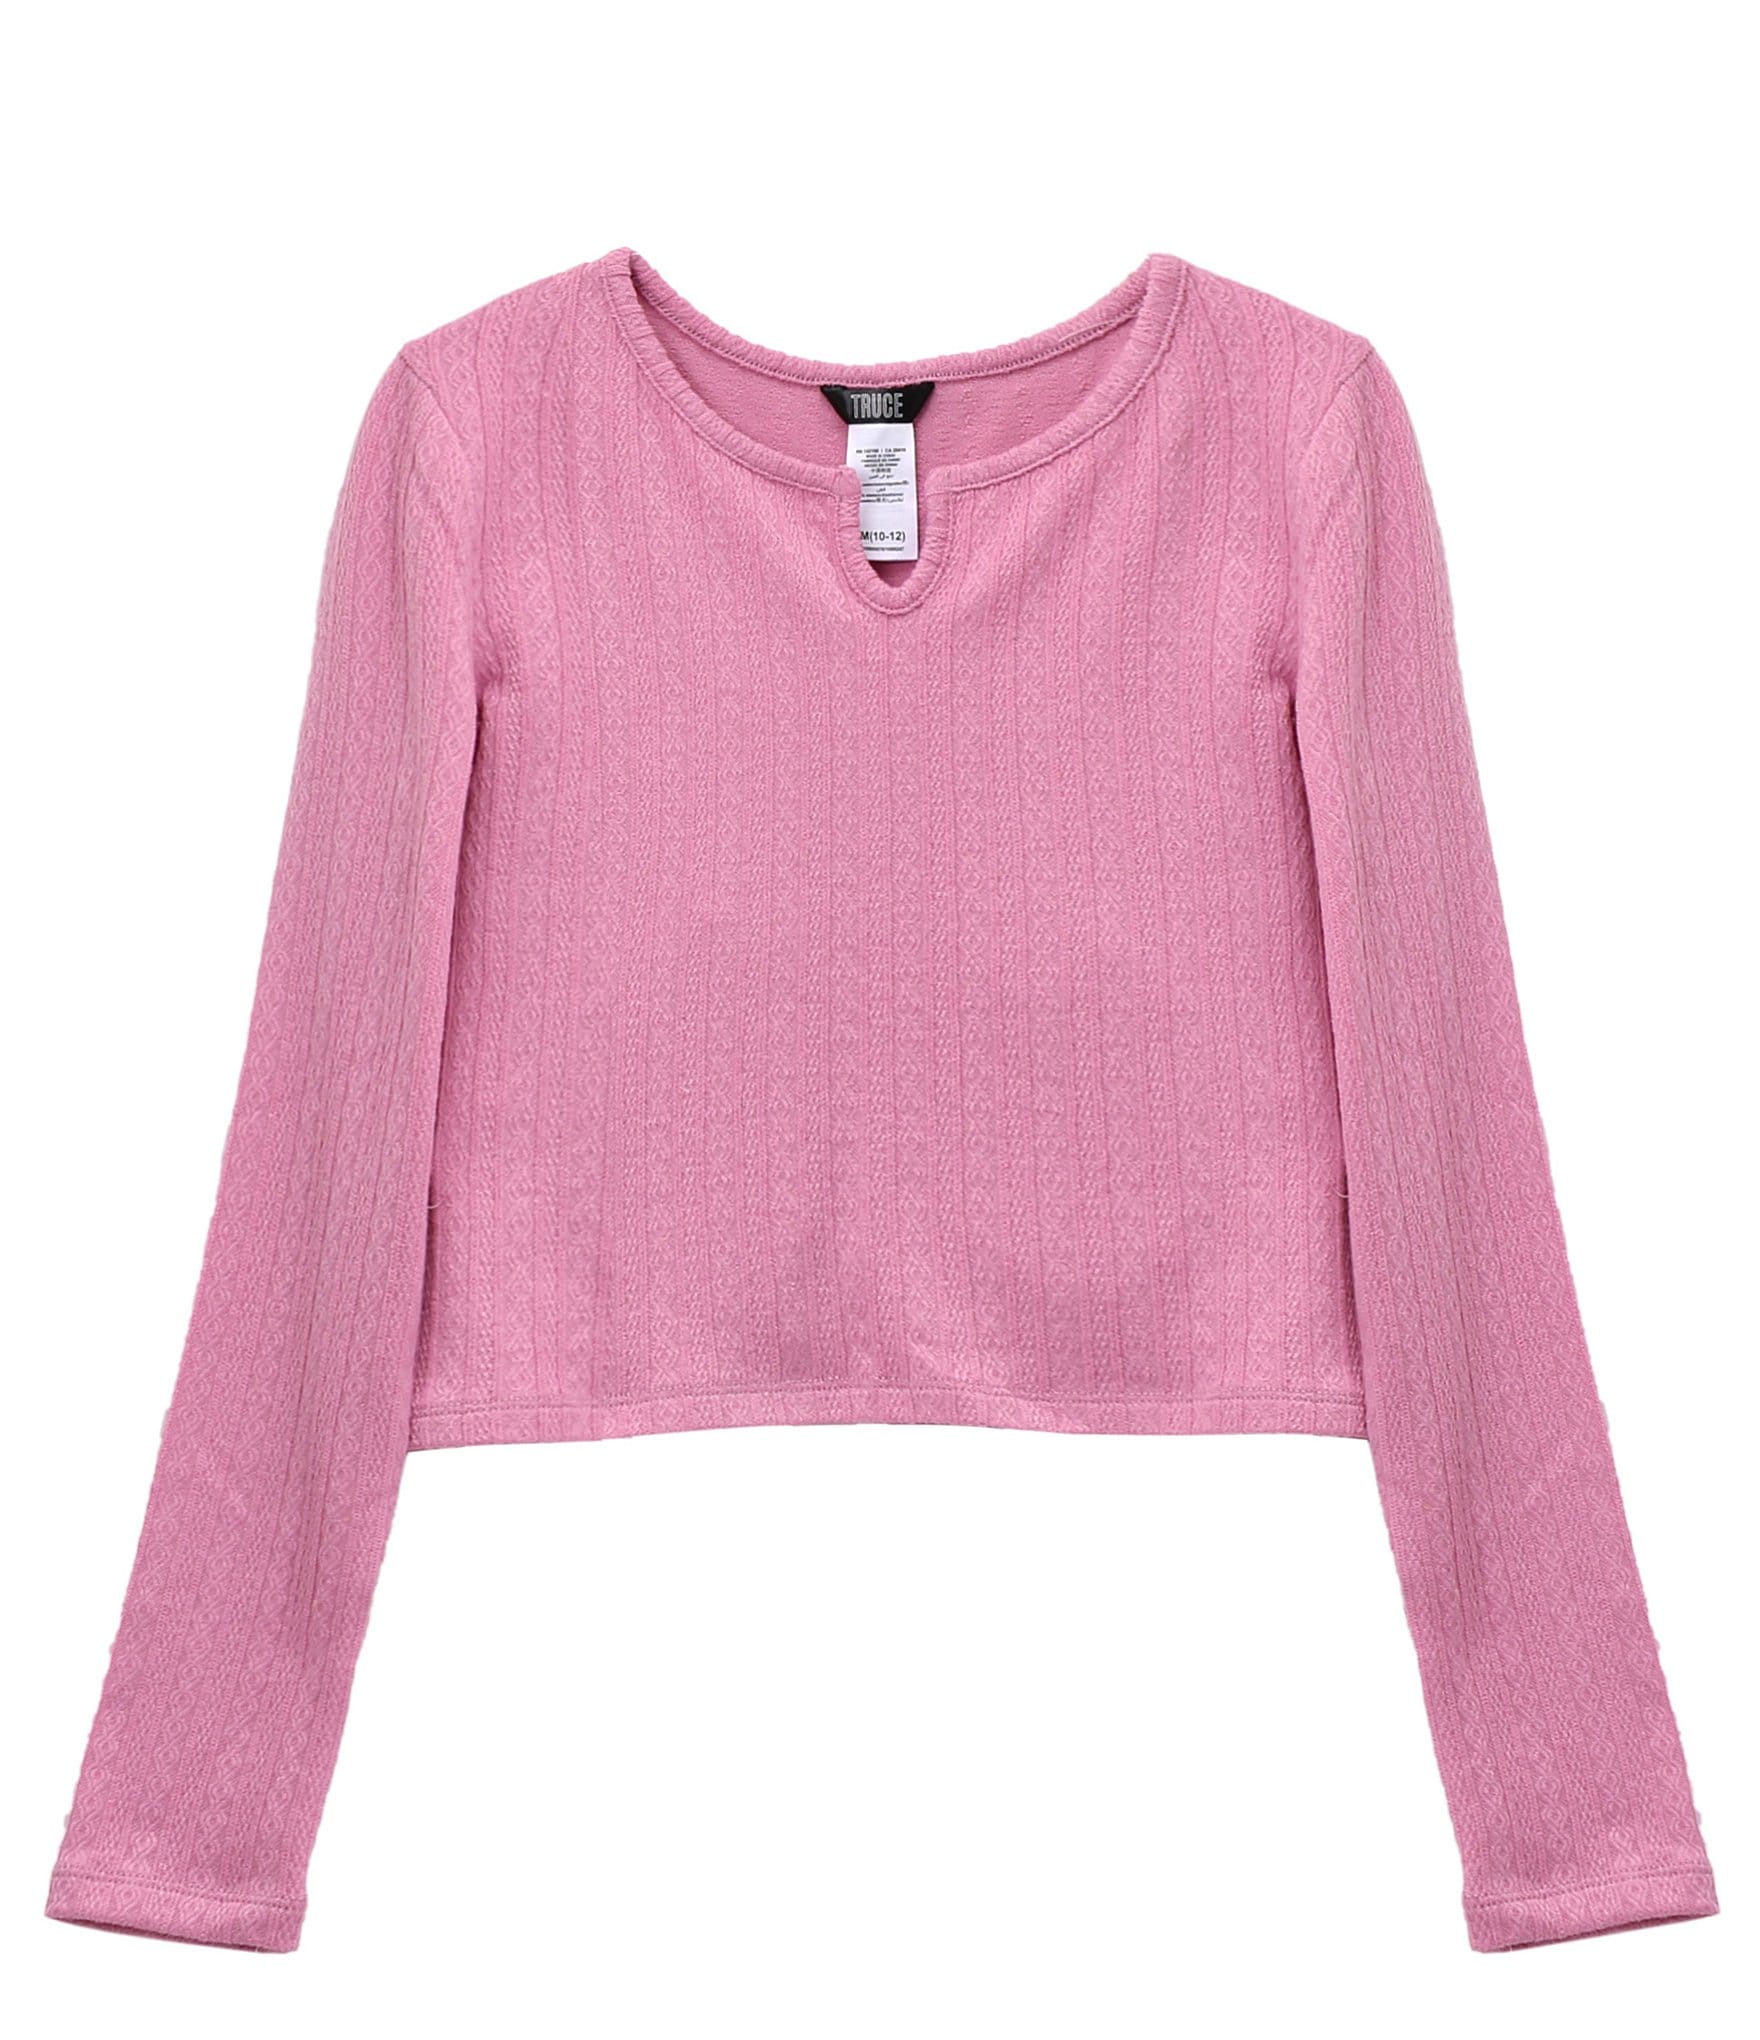 Top Long Sleeve Shirt Top Girl High School Musical Pink Gray Red 116-152  #62